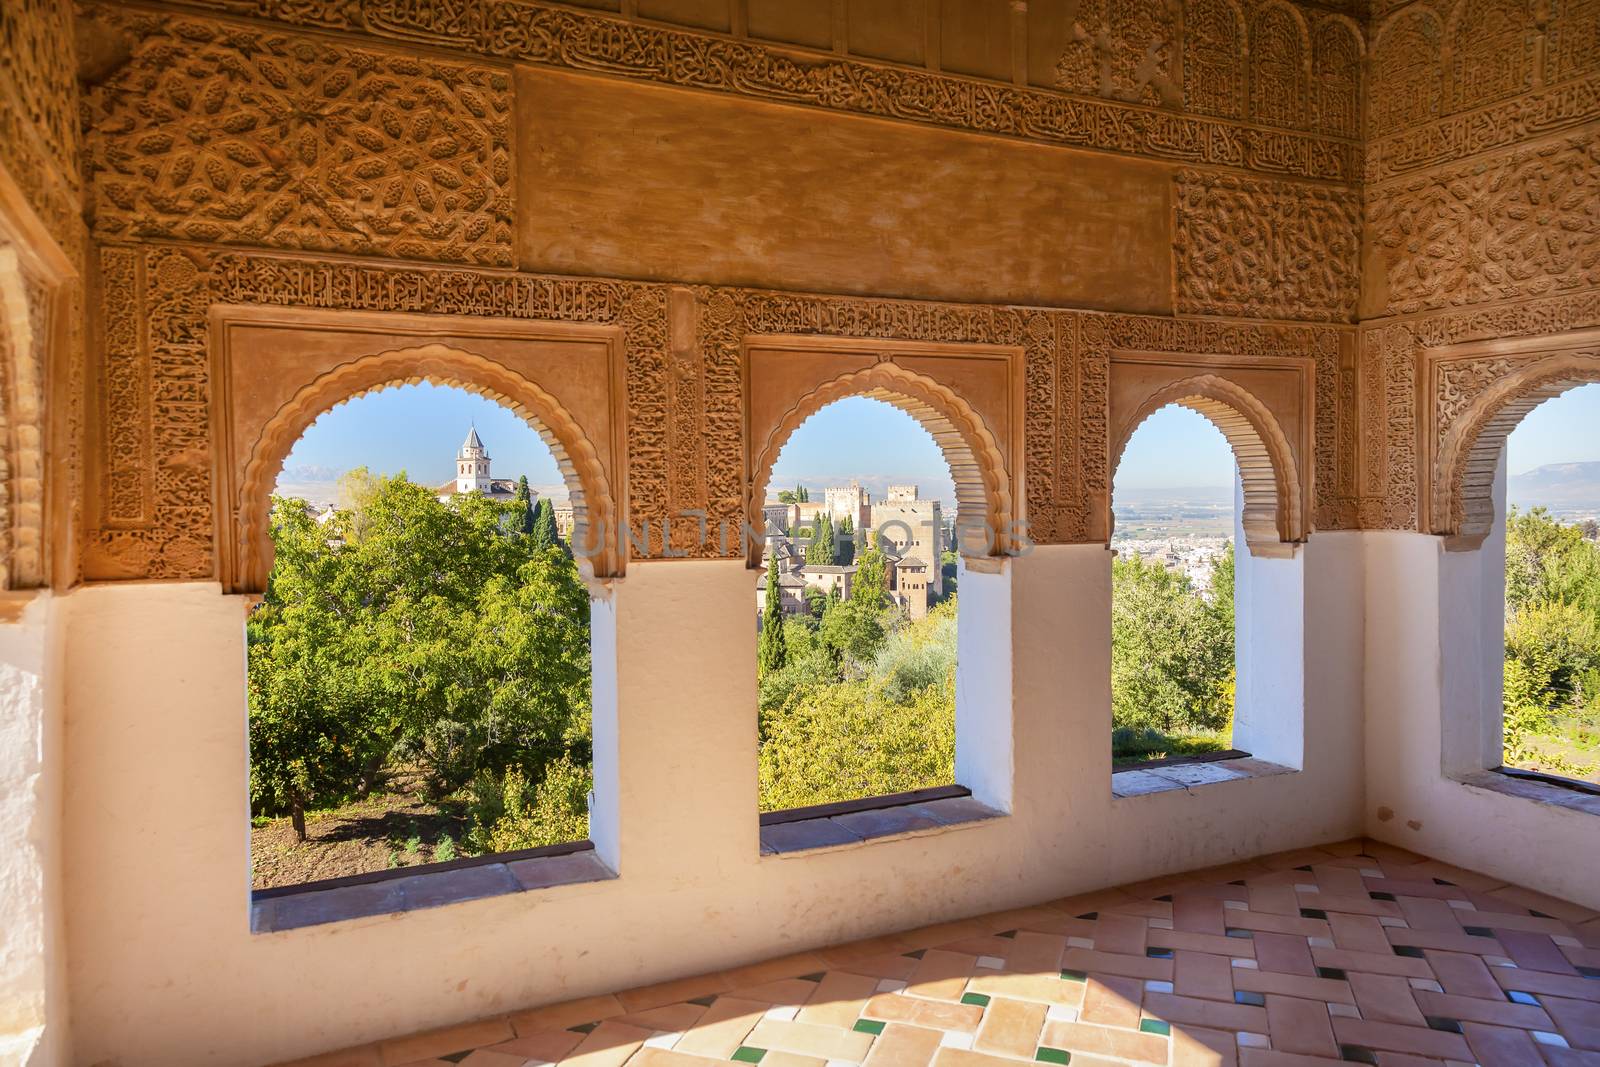 Alhambra Moorish Wall Windows Patterns Designs City View Granada Andalusia Spain.  